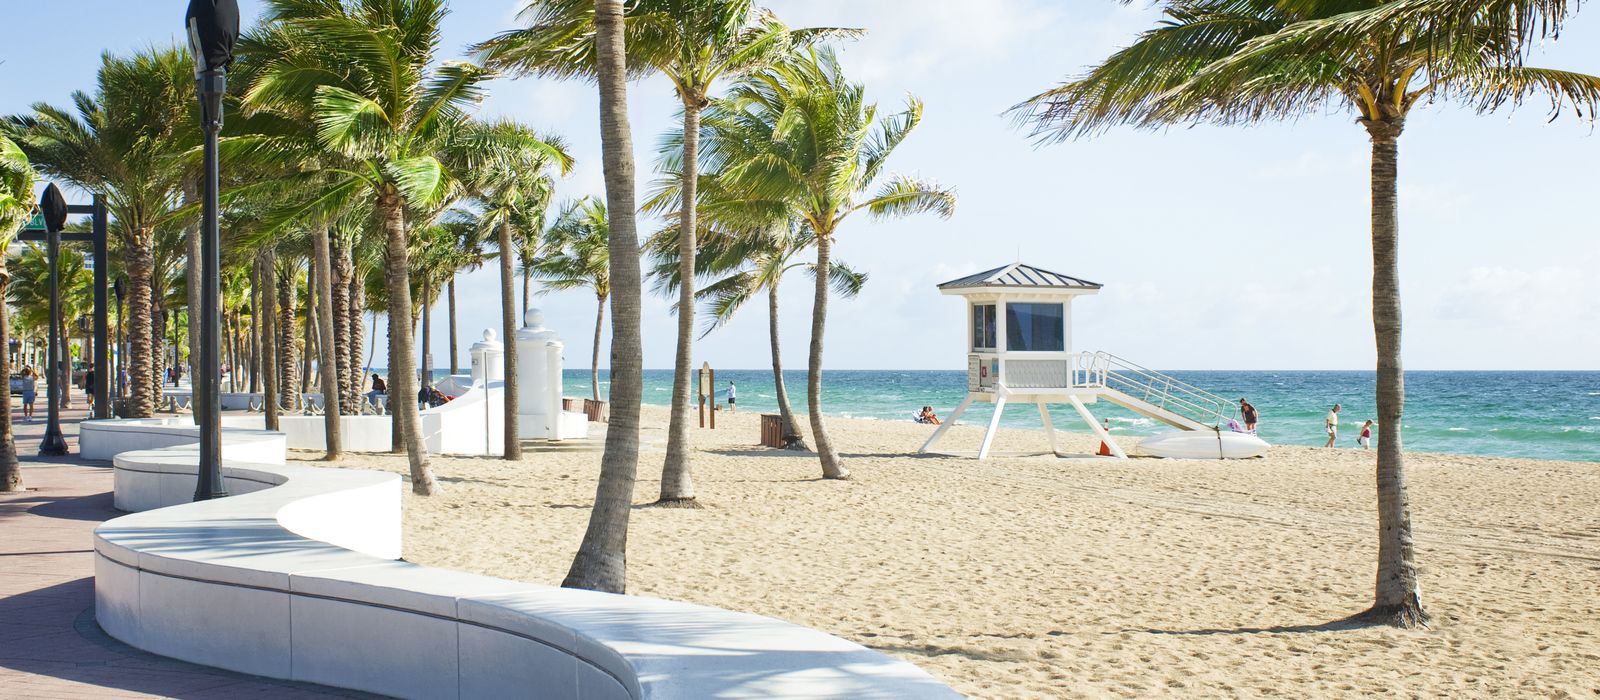 Playbook Beach in Fort Lauderdale, Florida